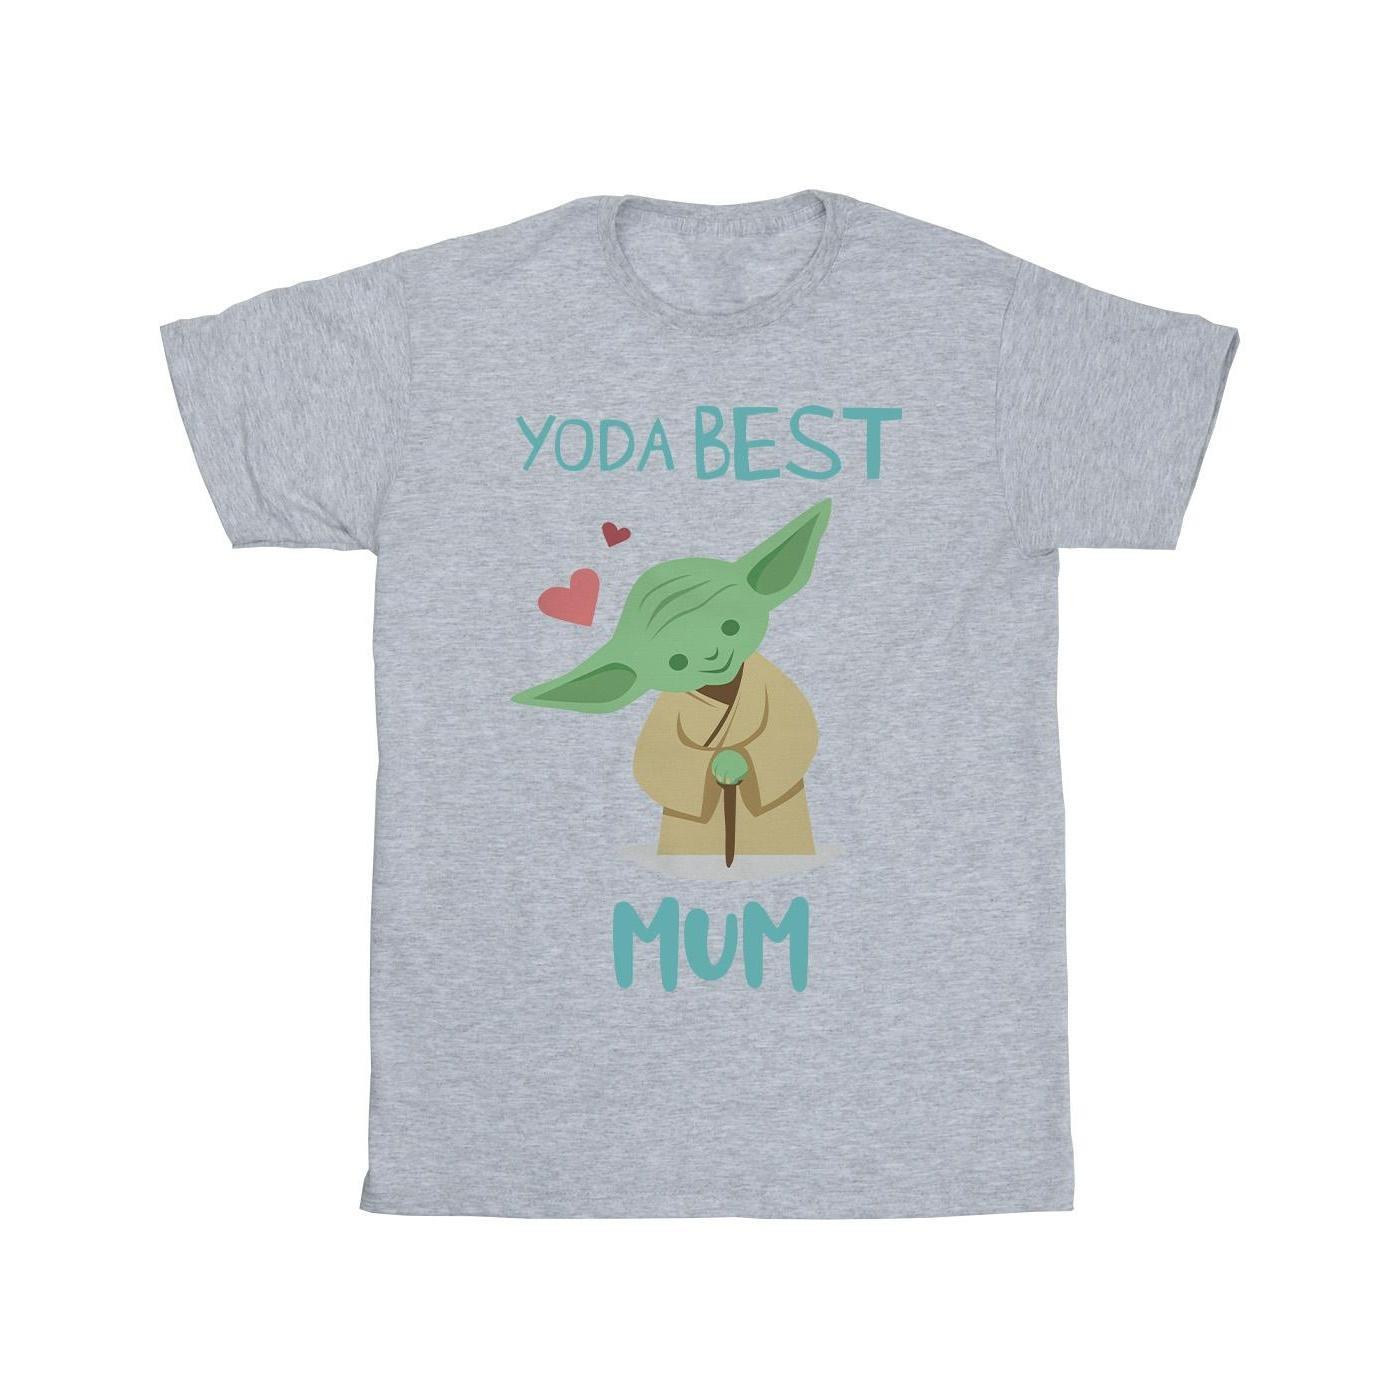 Star Wars Boys Yoda Best Mum T-Shirt (Sports Grey) (3-4 Years)